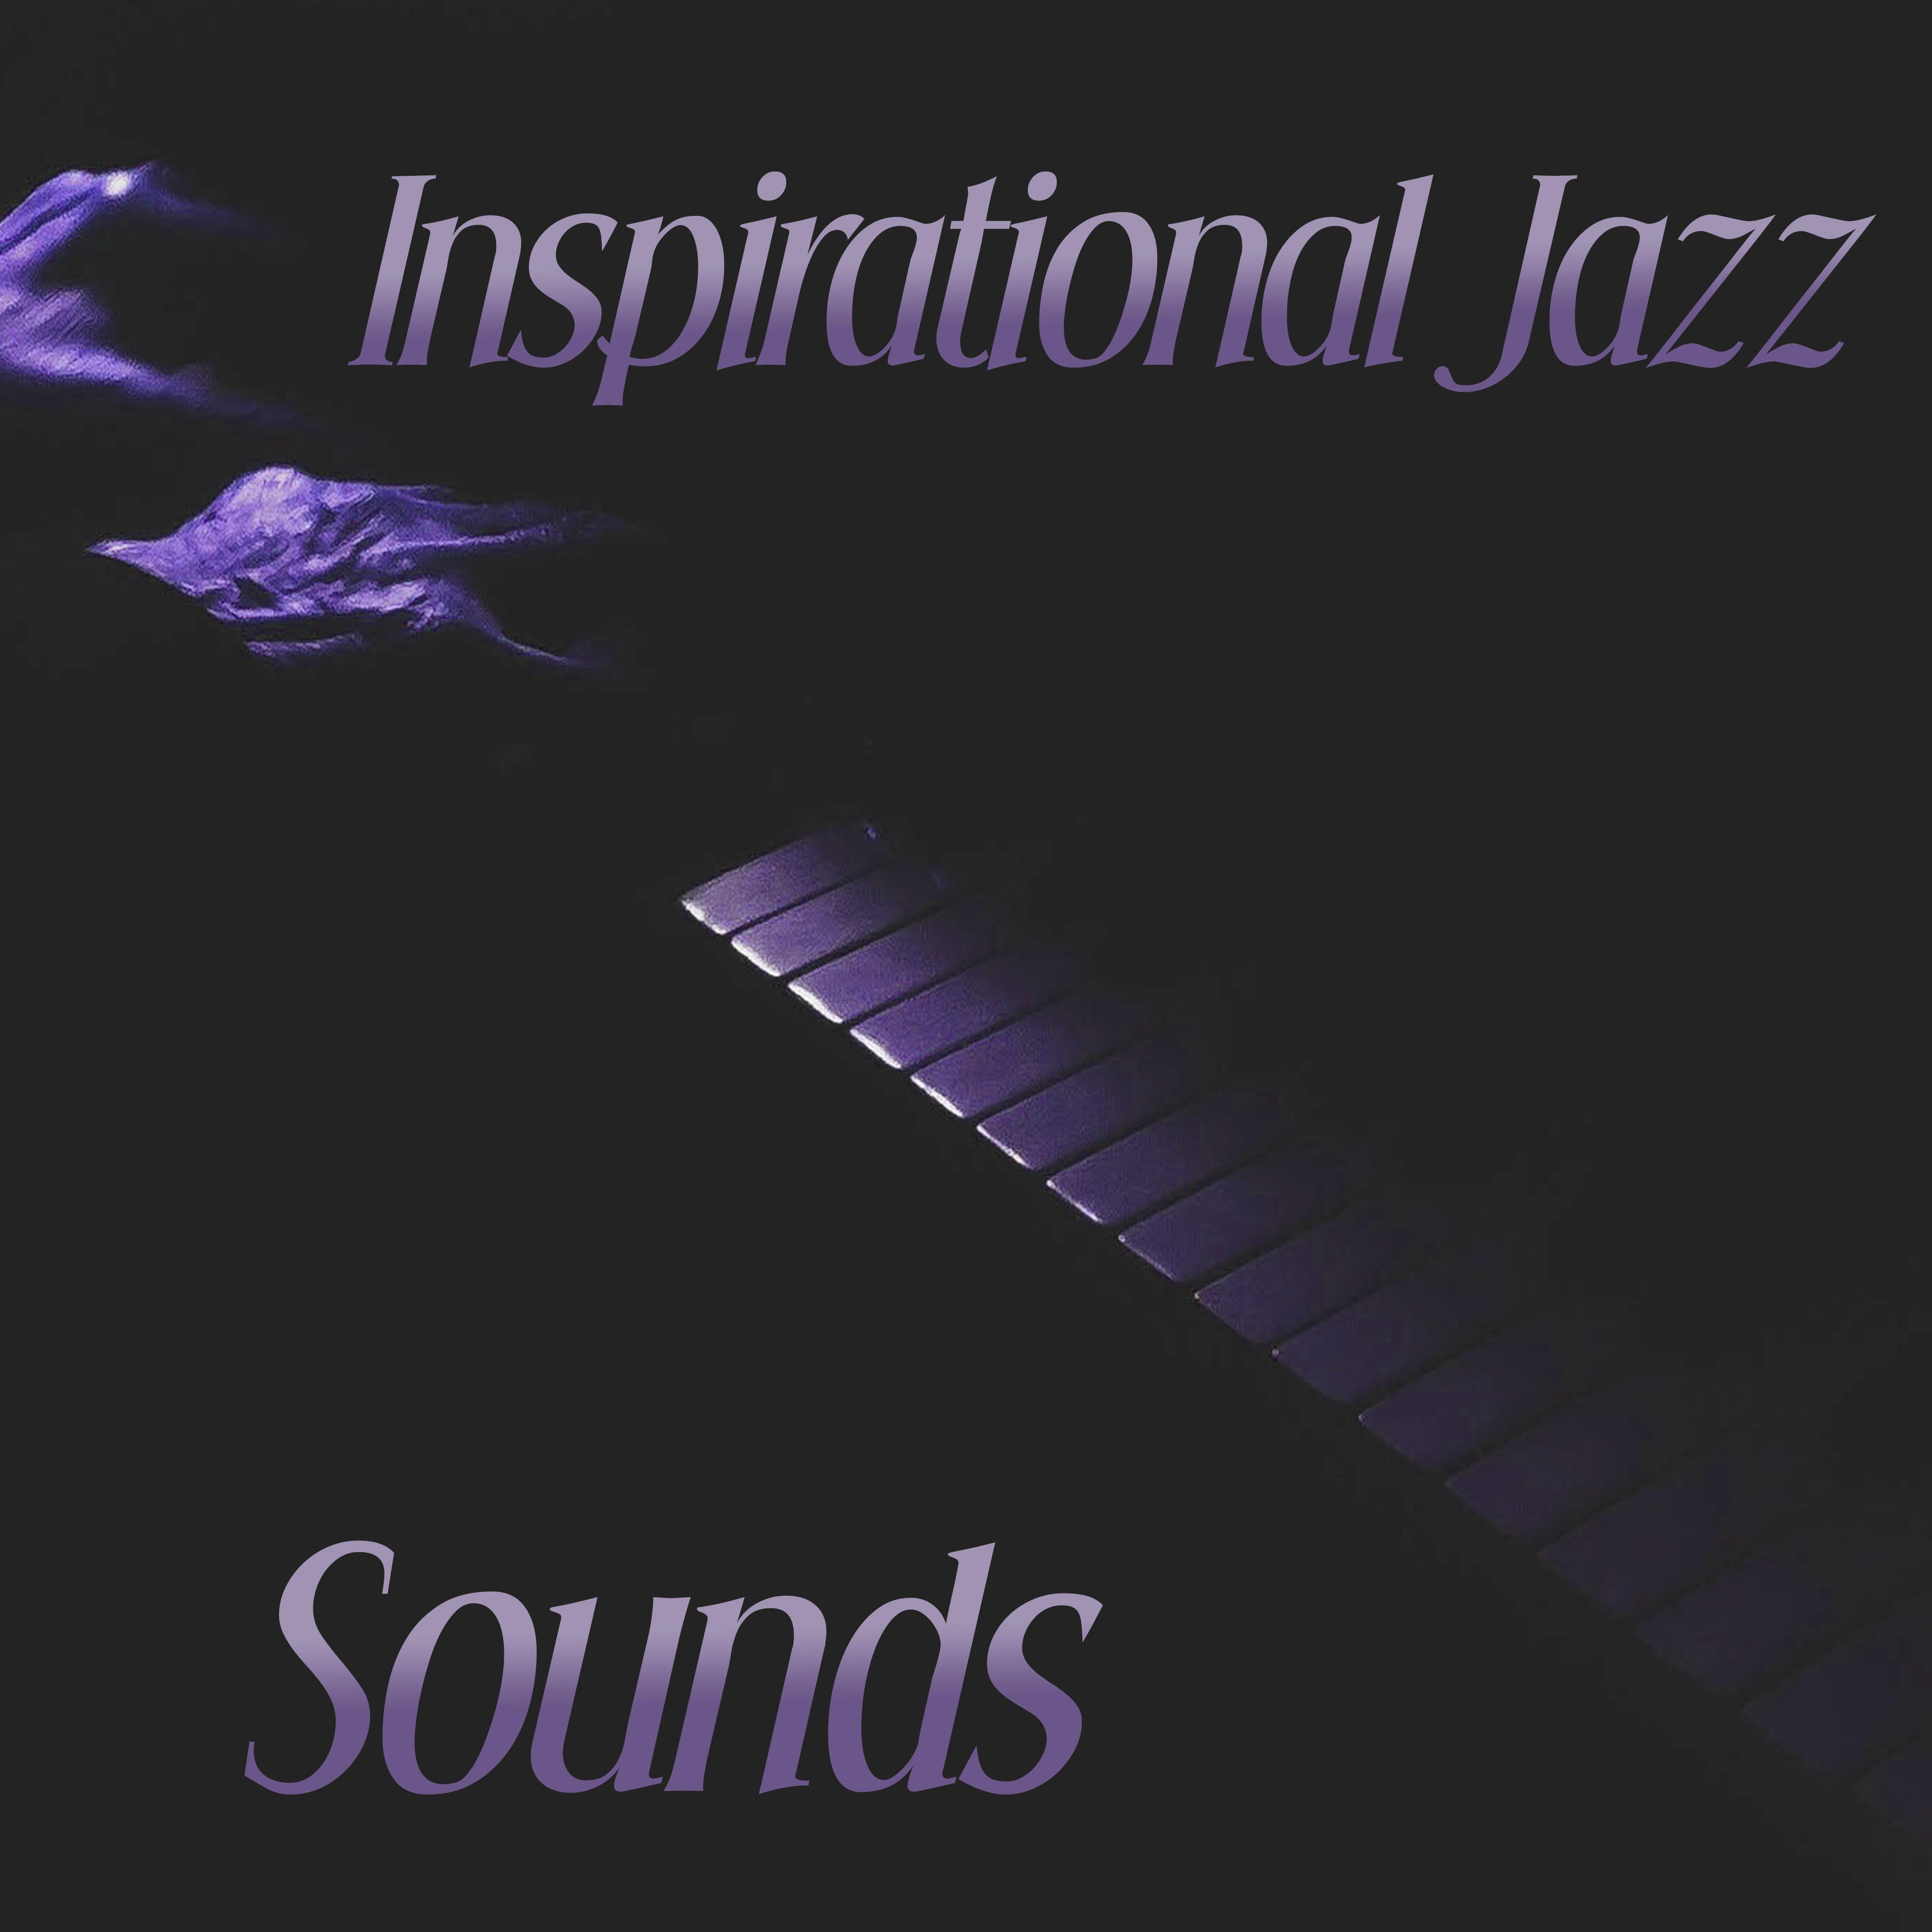 Inspirational Jazz Sounds - Calming Piano Sounds, Jazz Music, Best Piano Jazz, Easy Listening, Blue Jazz